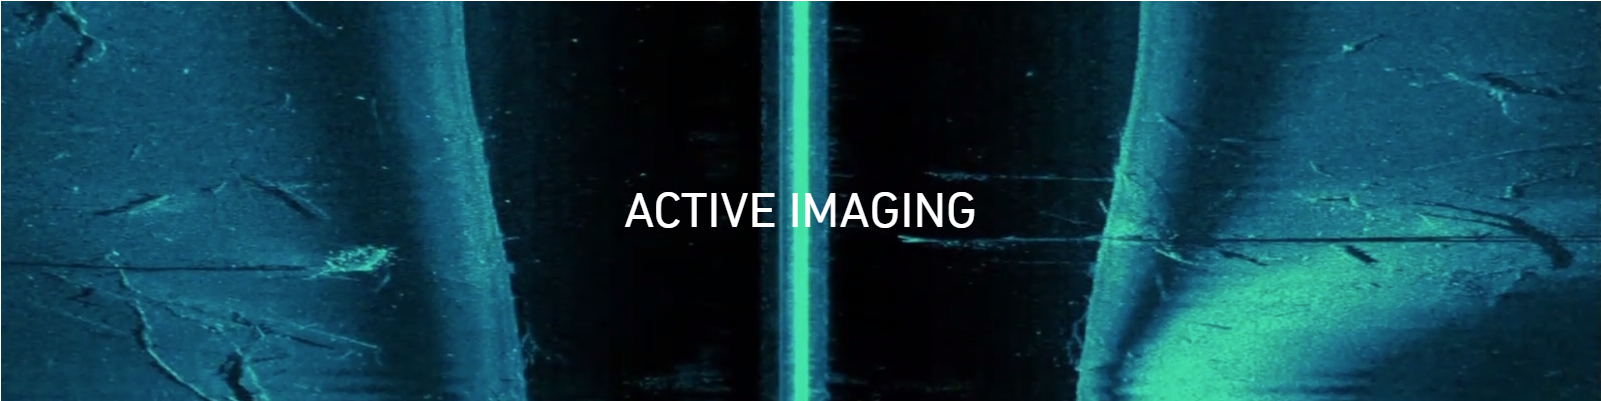 Elite-FS-Active-Imaging